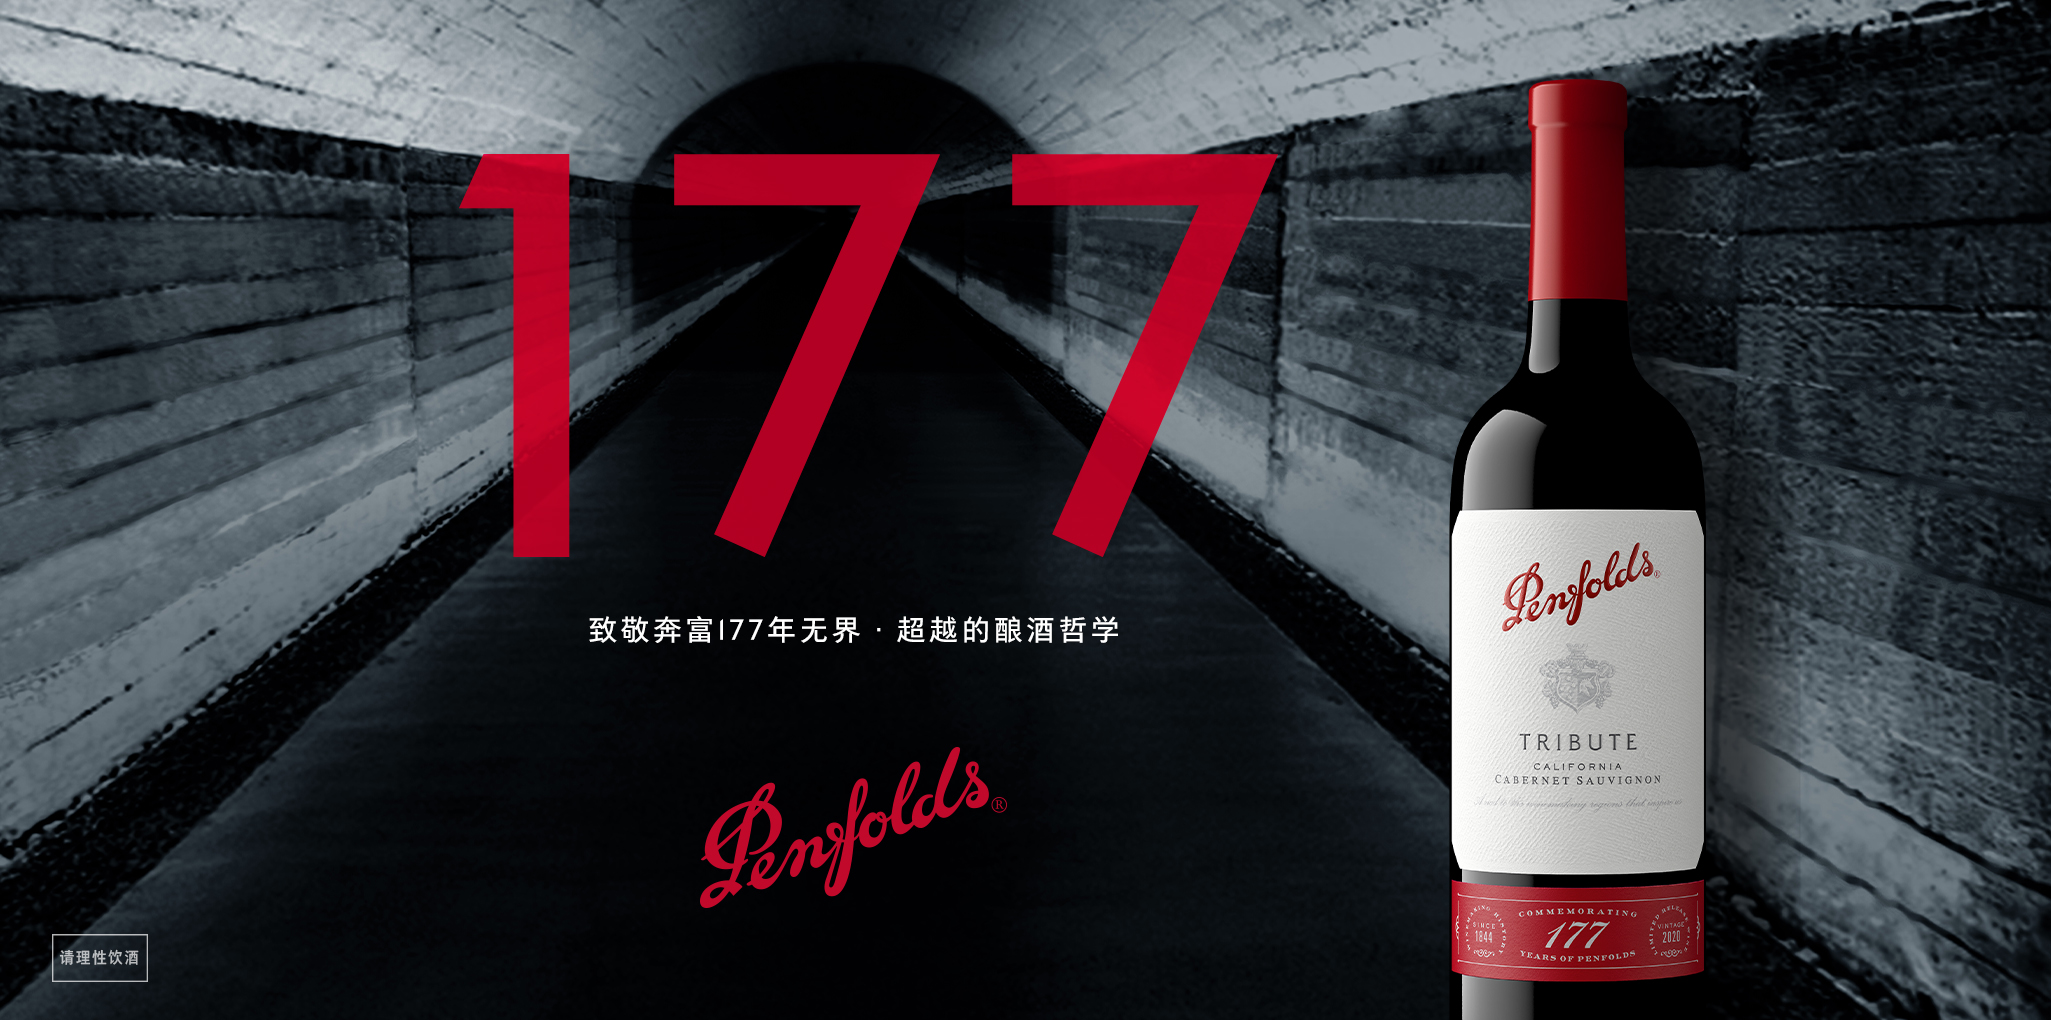 Penfolds奔富即将首次亮相第二届中国国际消费者博览会「无界·超越」葡萄酒探索之旅即将开启